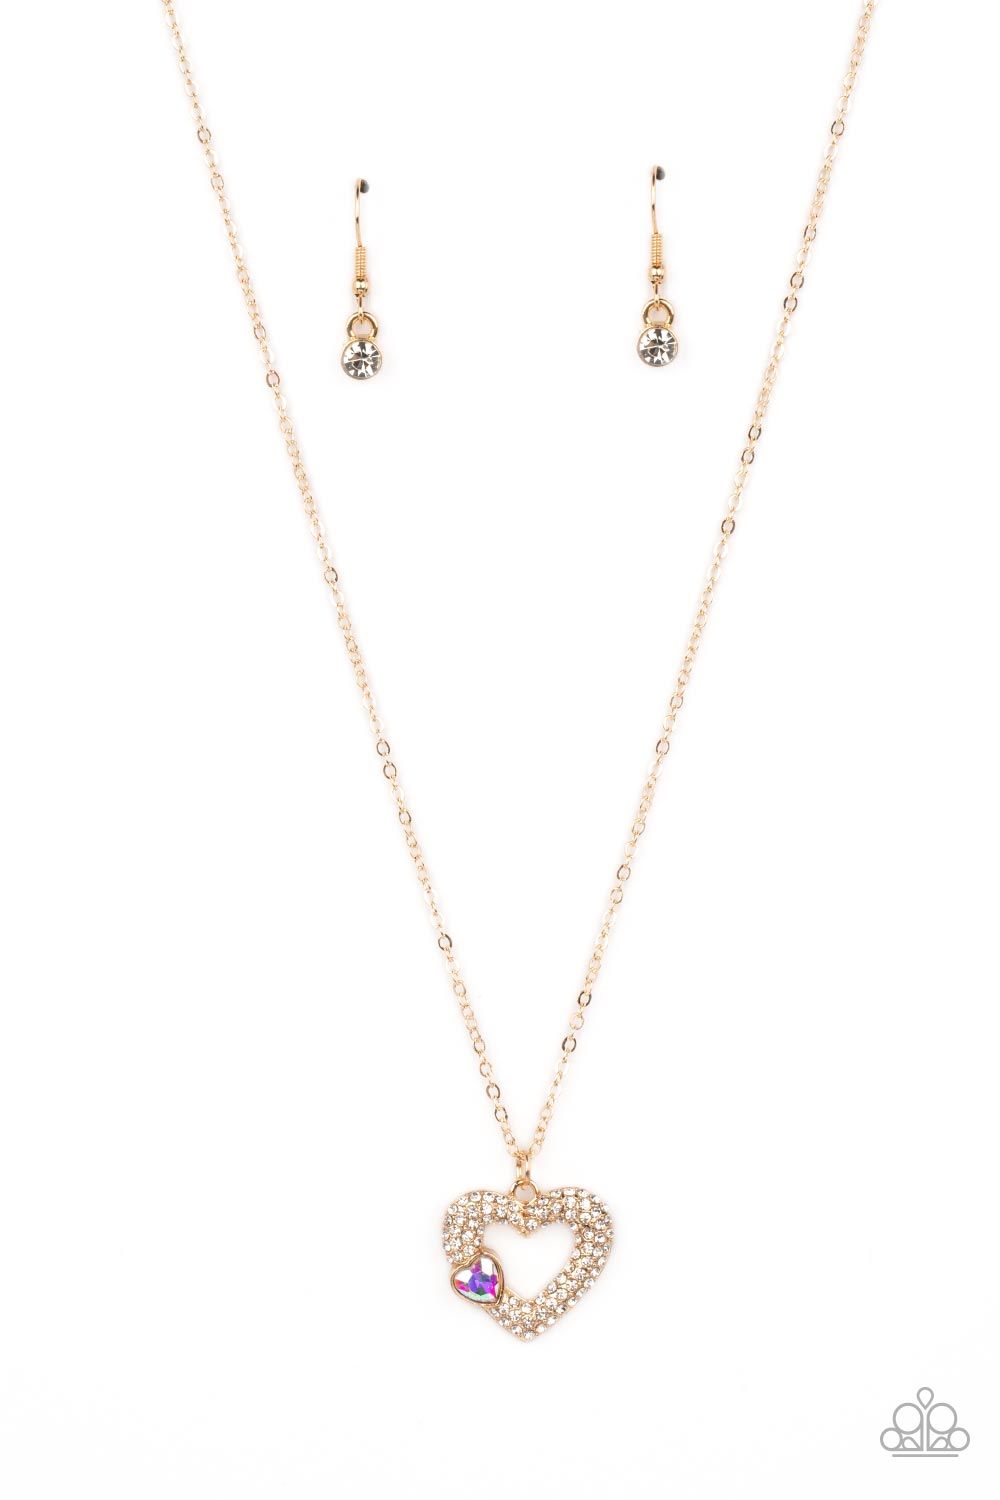 Bedazzled Bliss - Multi Gold Necklace Set - Princess Glam Shop